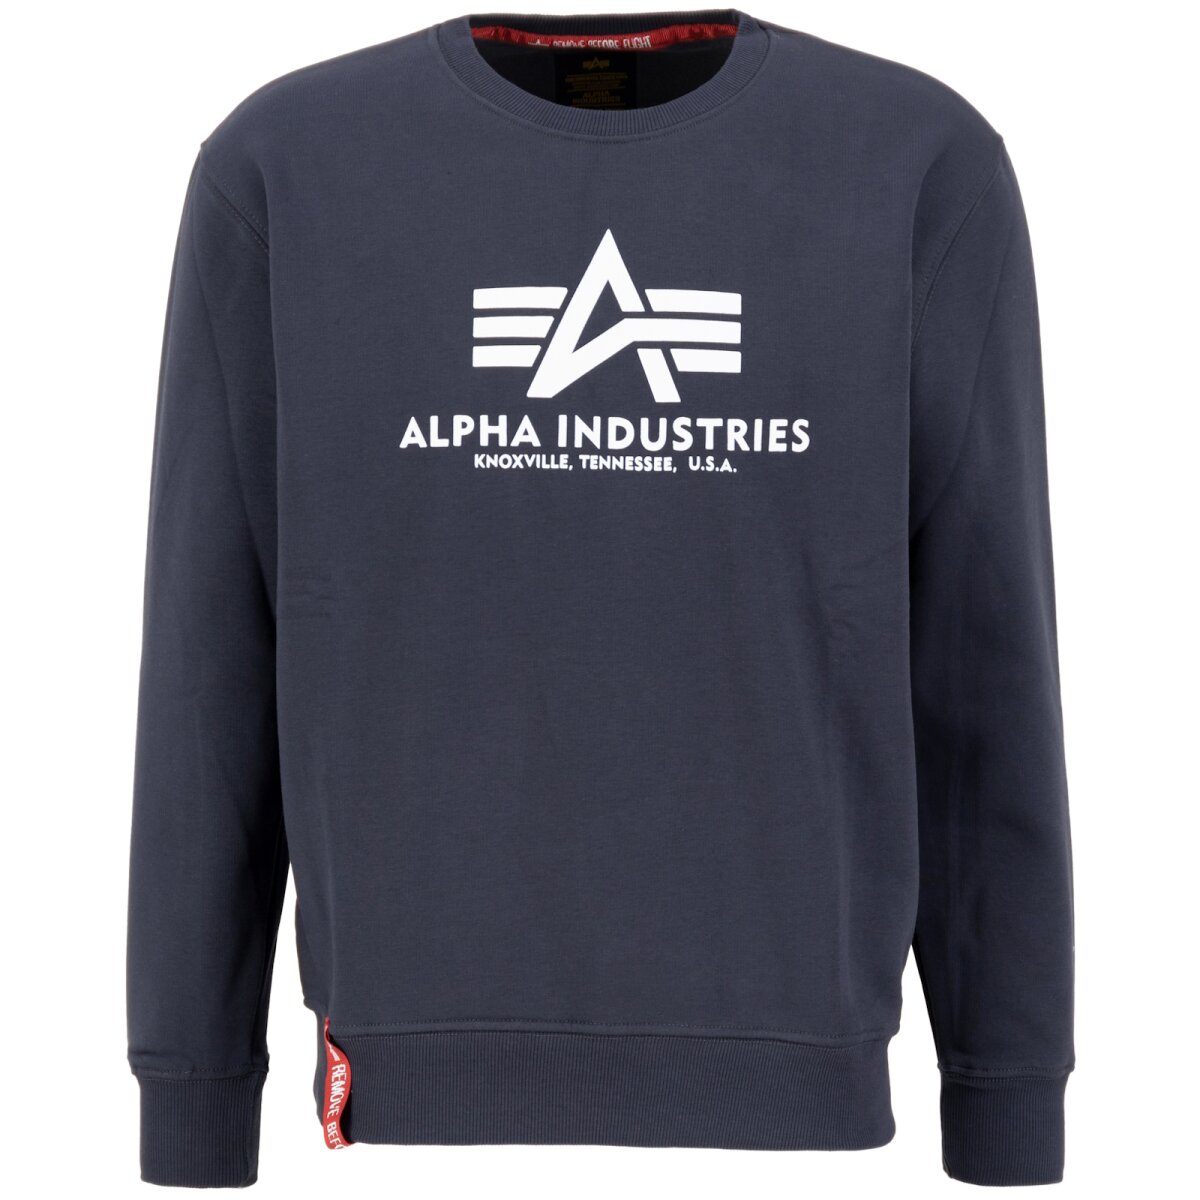 Basic navy, Industries 47,90 Sweater Alpha €